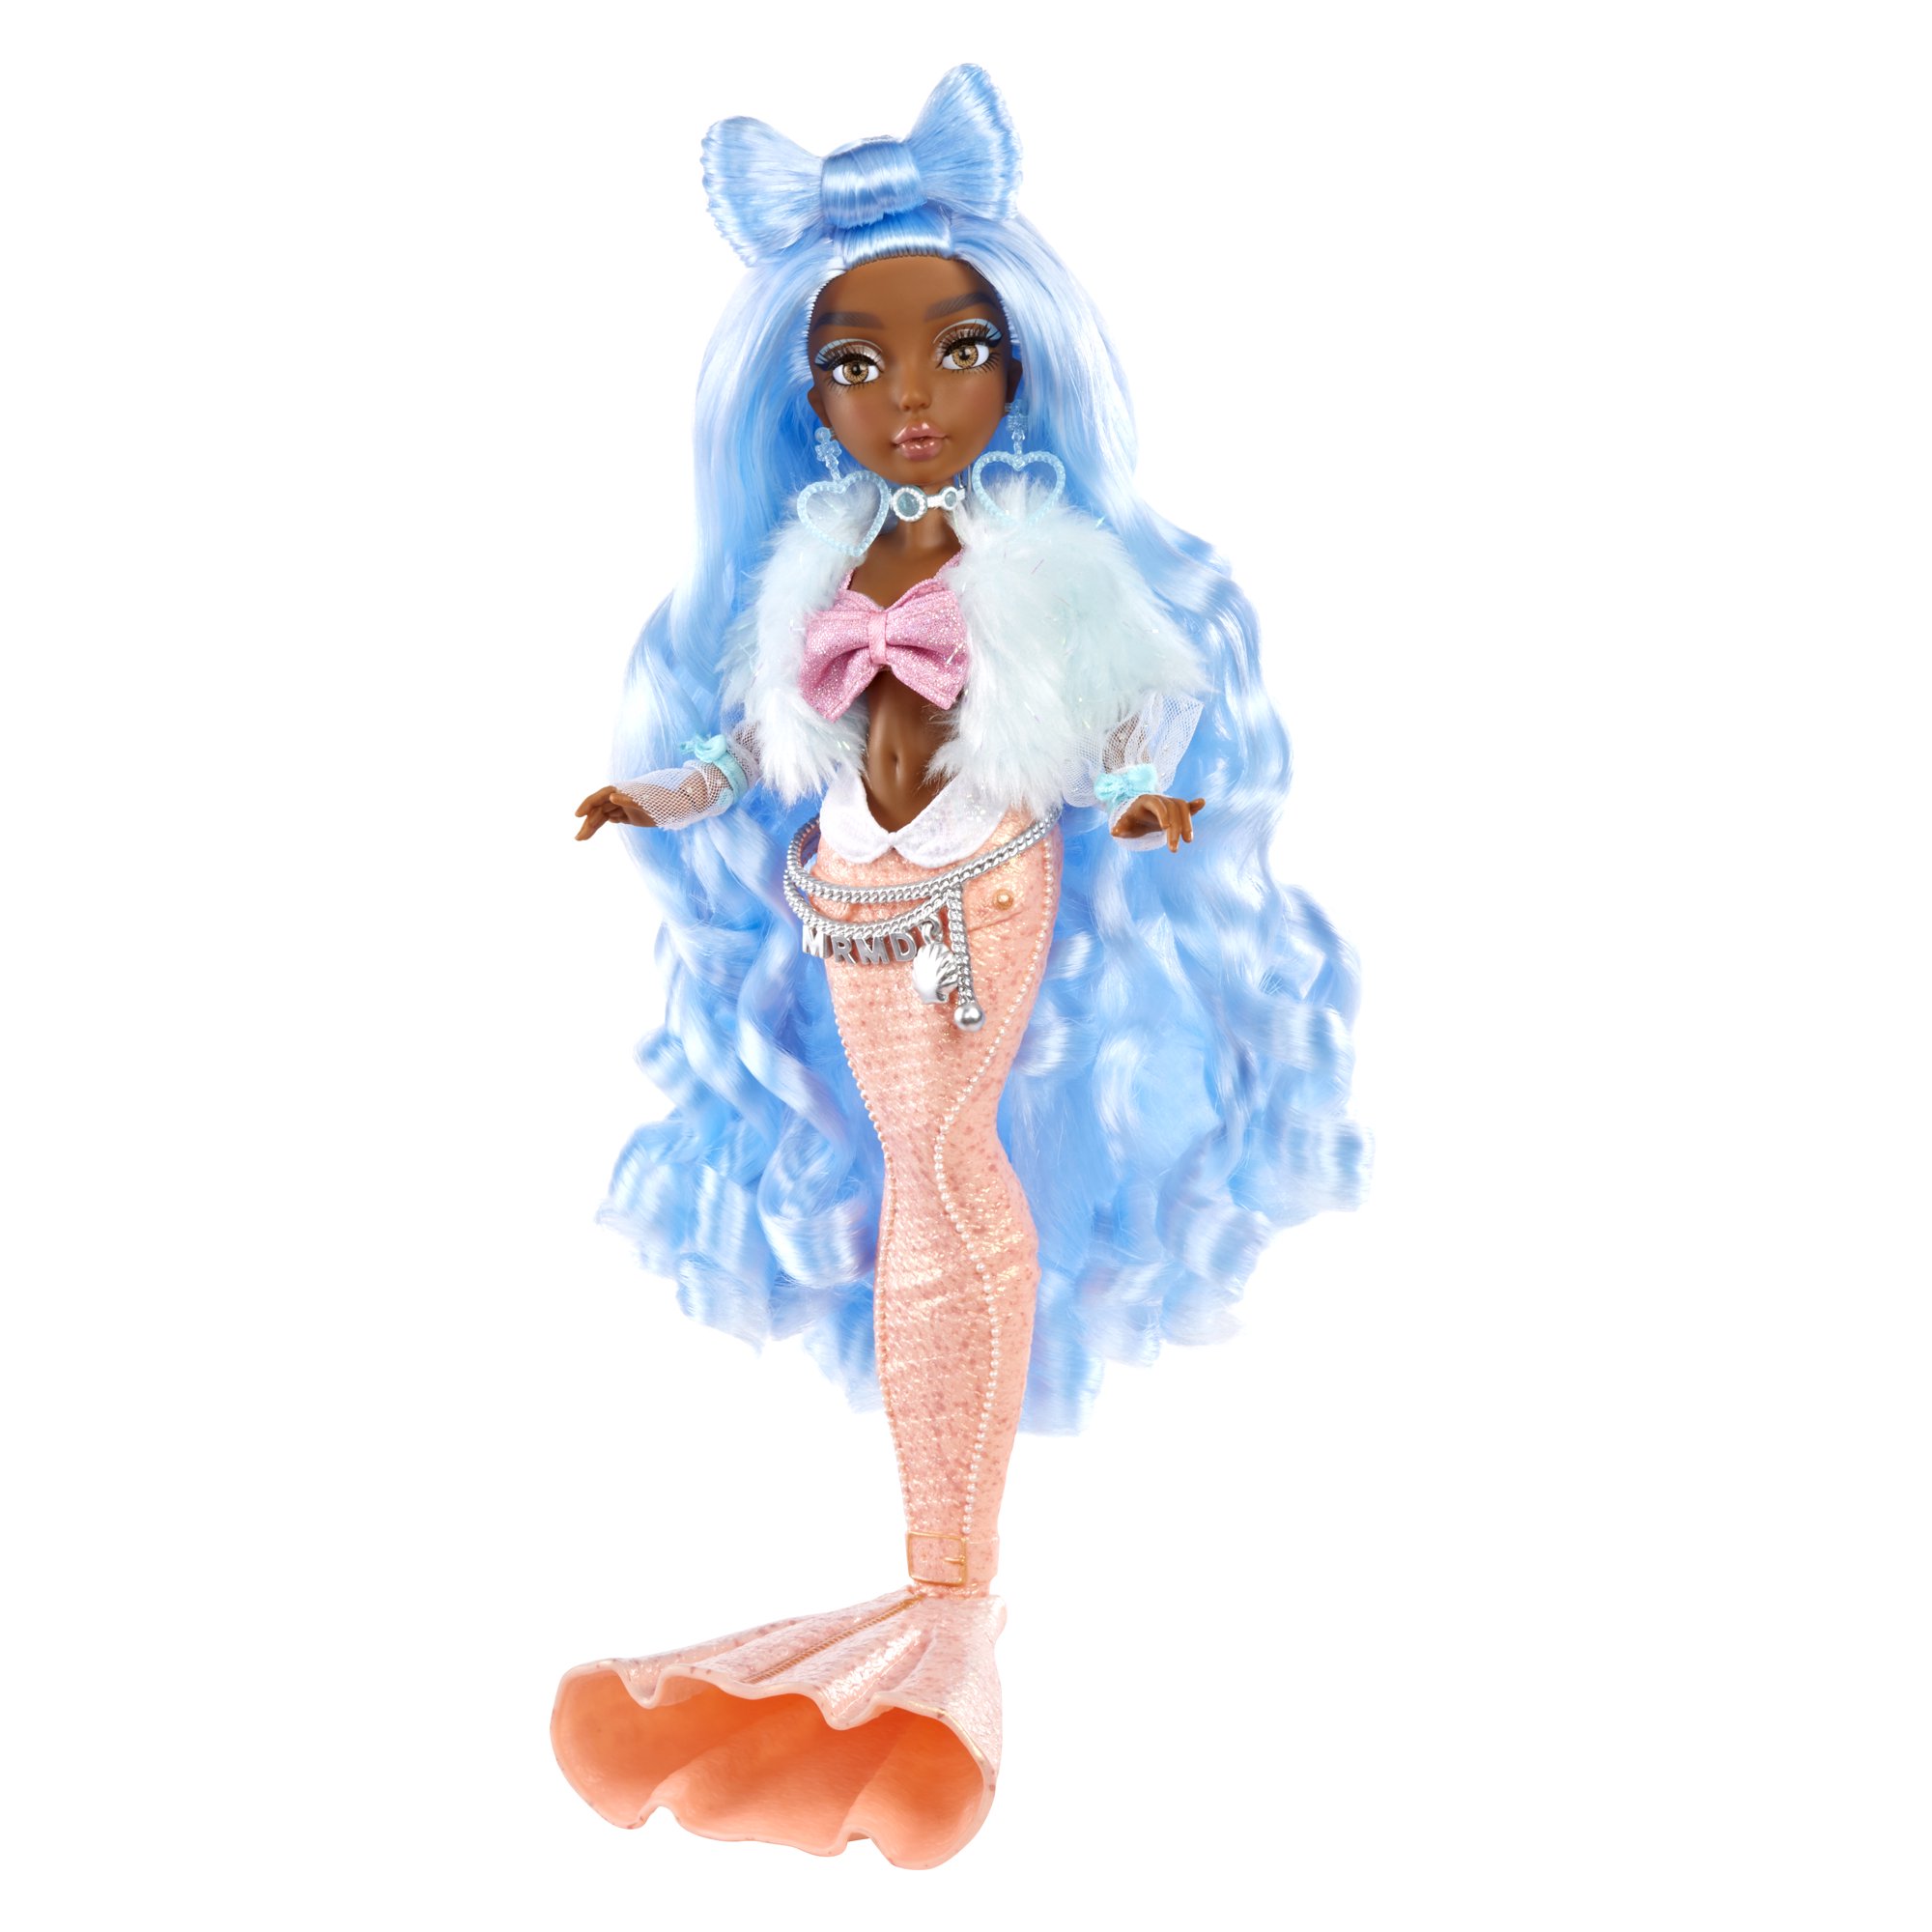 Mermaze Mermaidz Series 1 dolls - new mermaid dolls from MGA ...